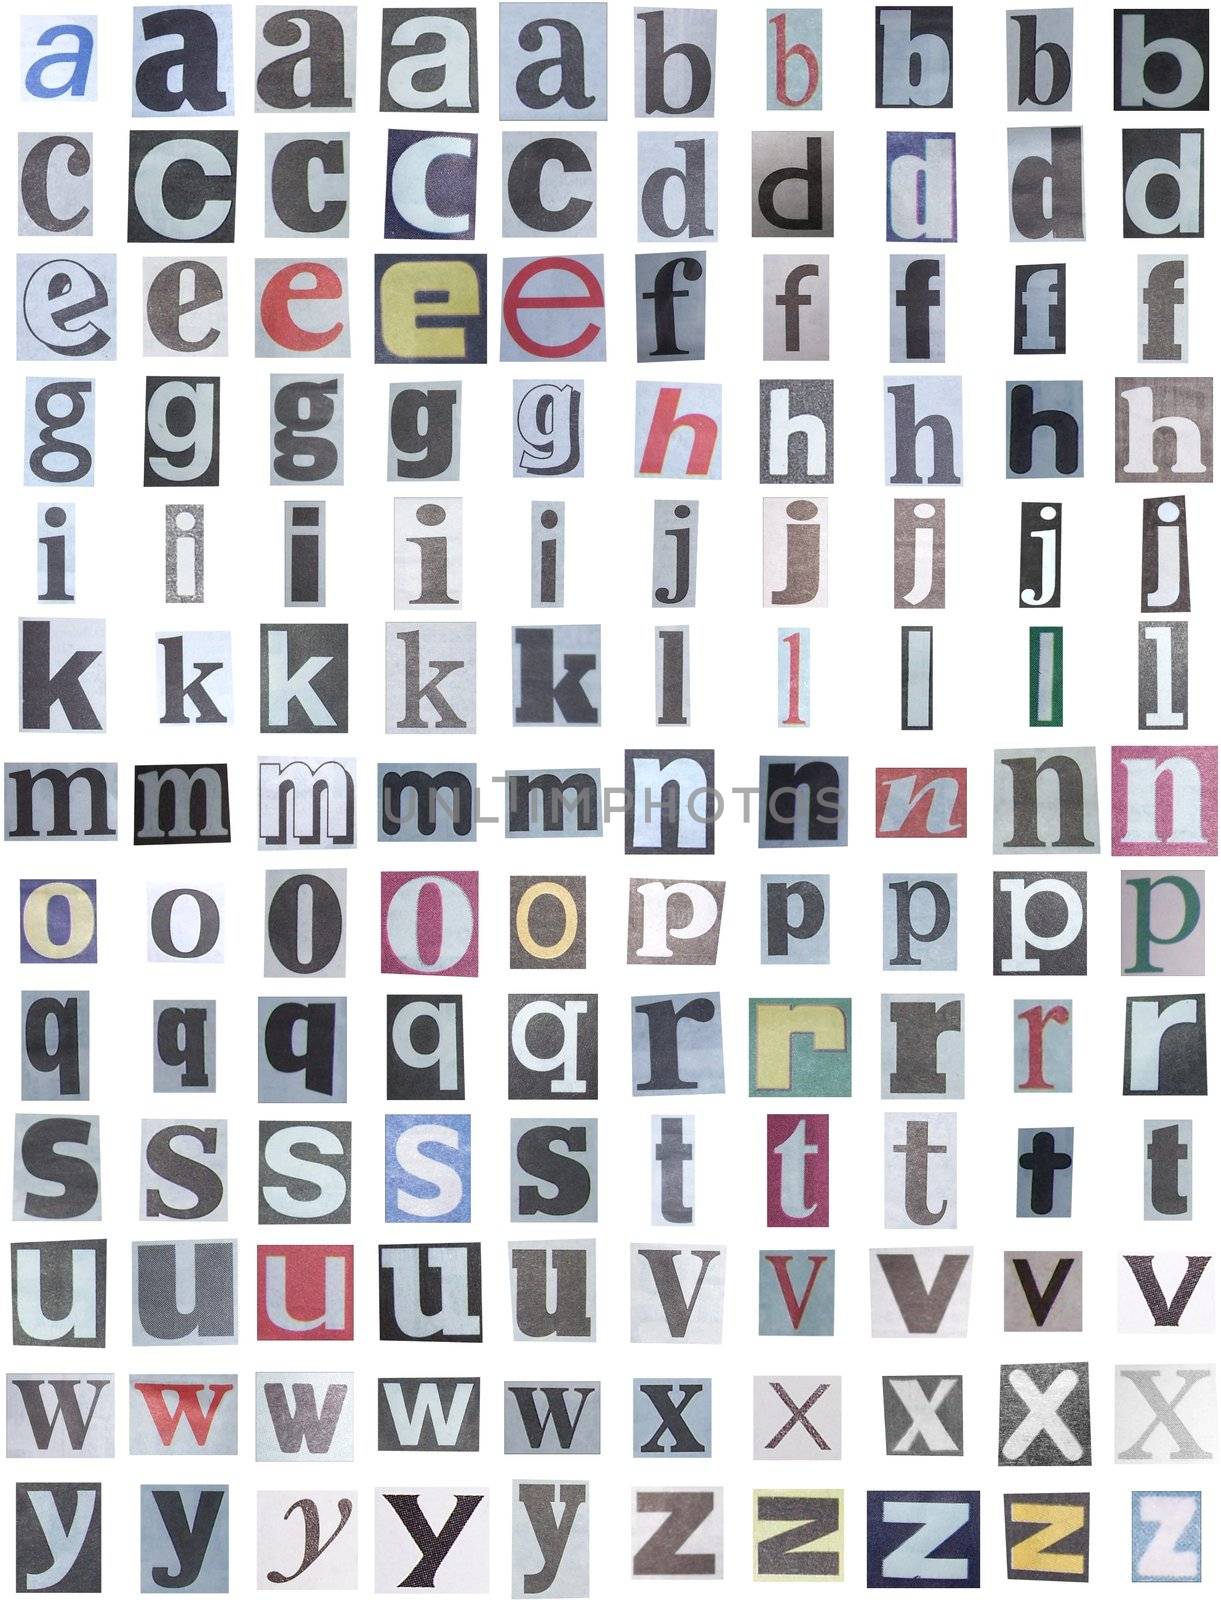 Newspaper alphabet lower case
